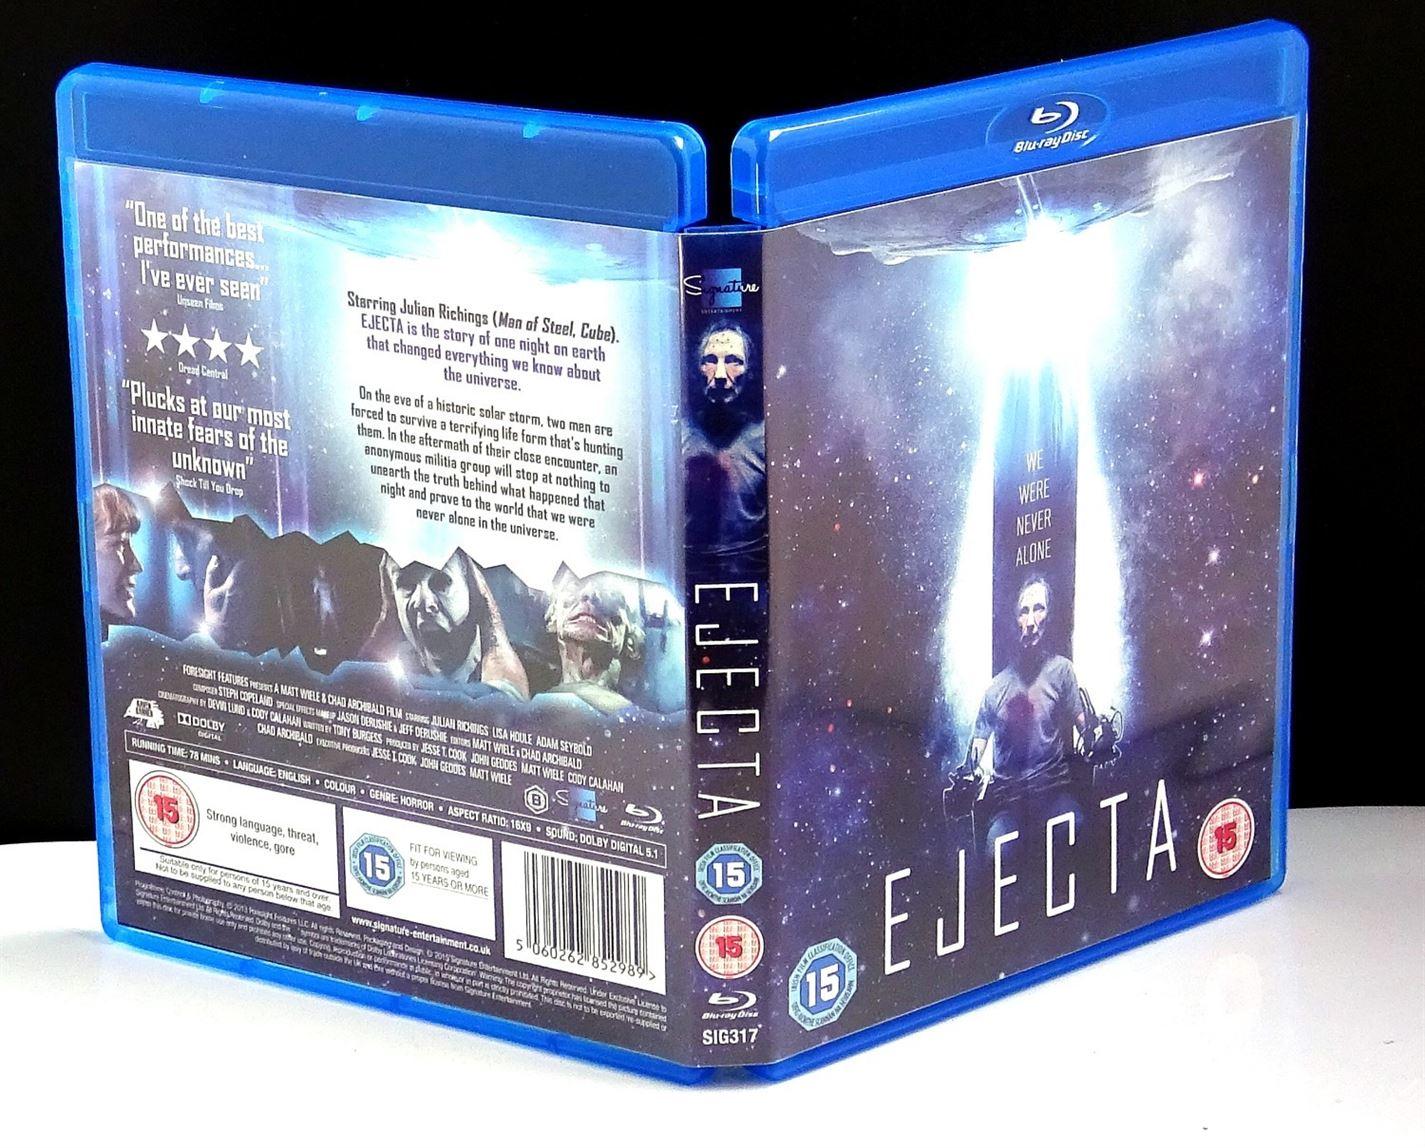 Ejecta (Blu Ray) - UK Seller